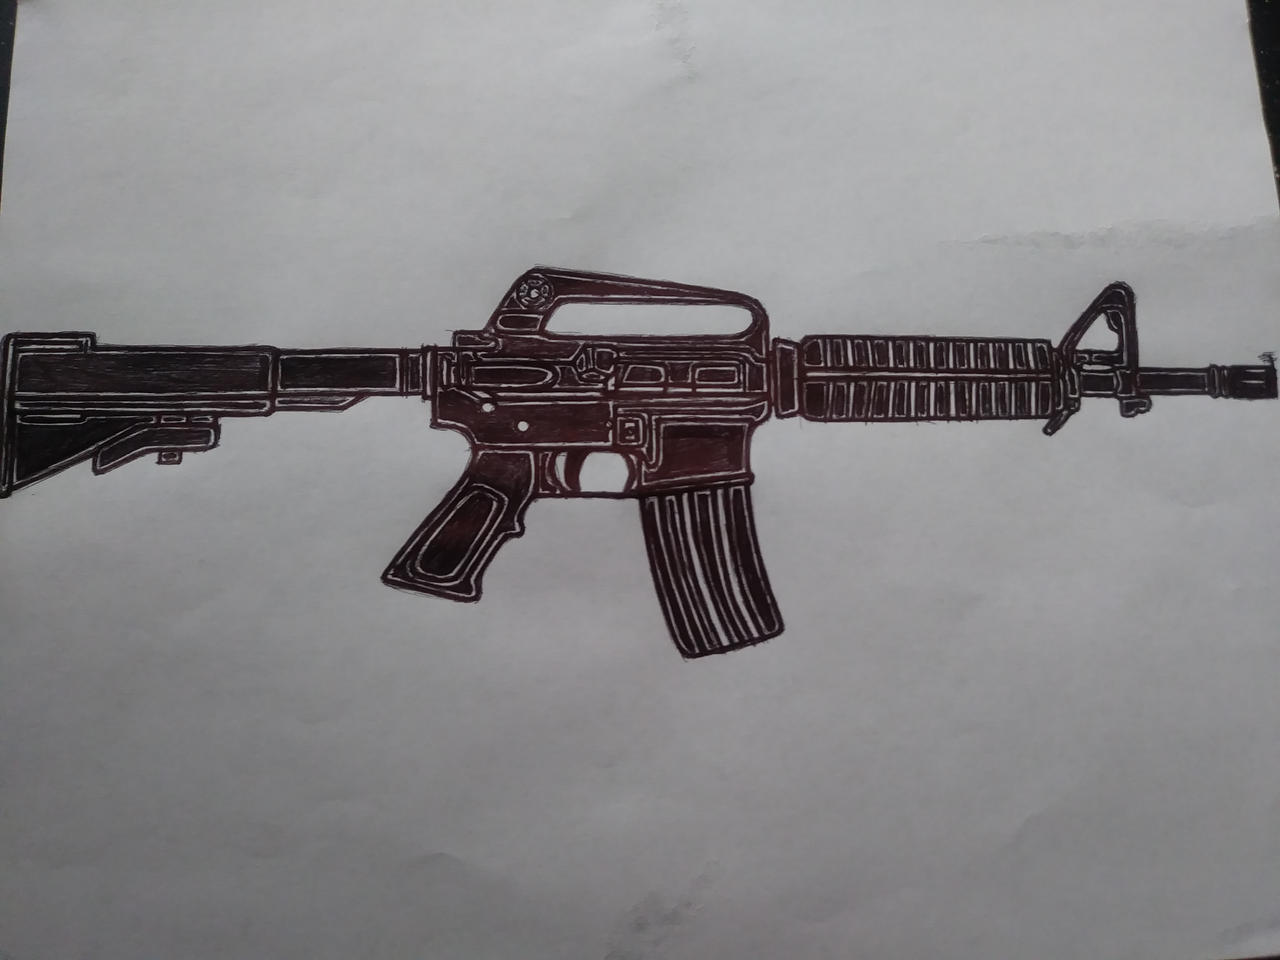 Pencil sketch machine gun. Stock Photo